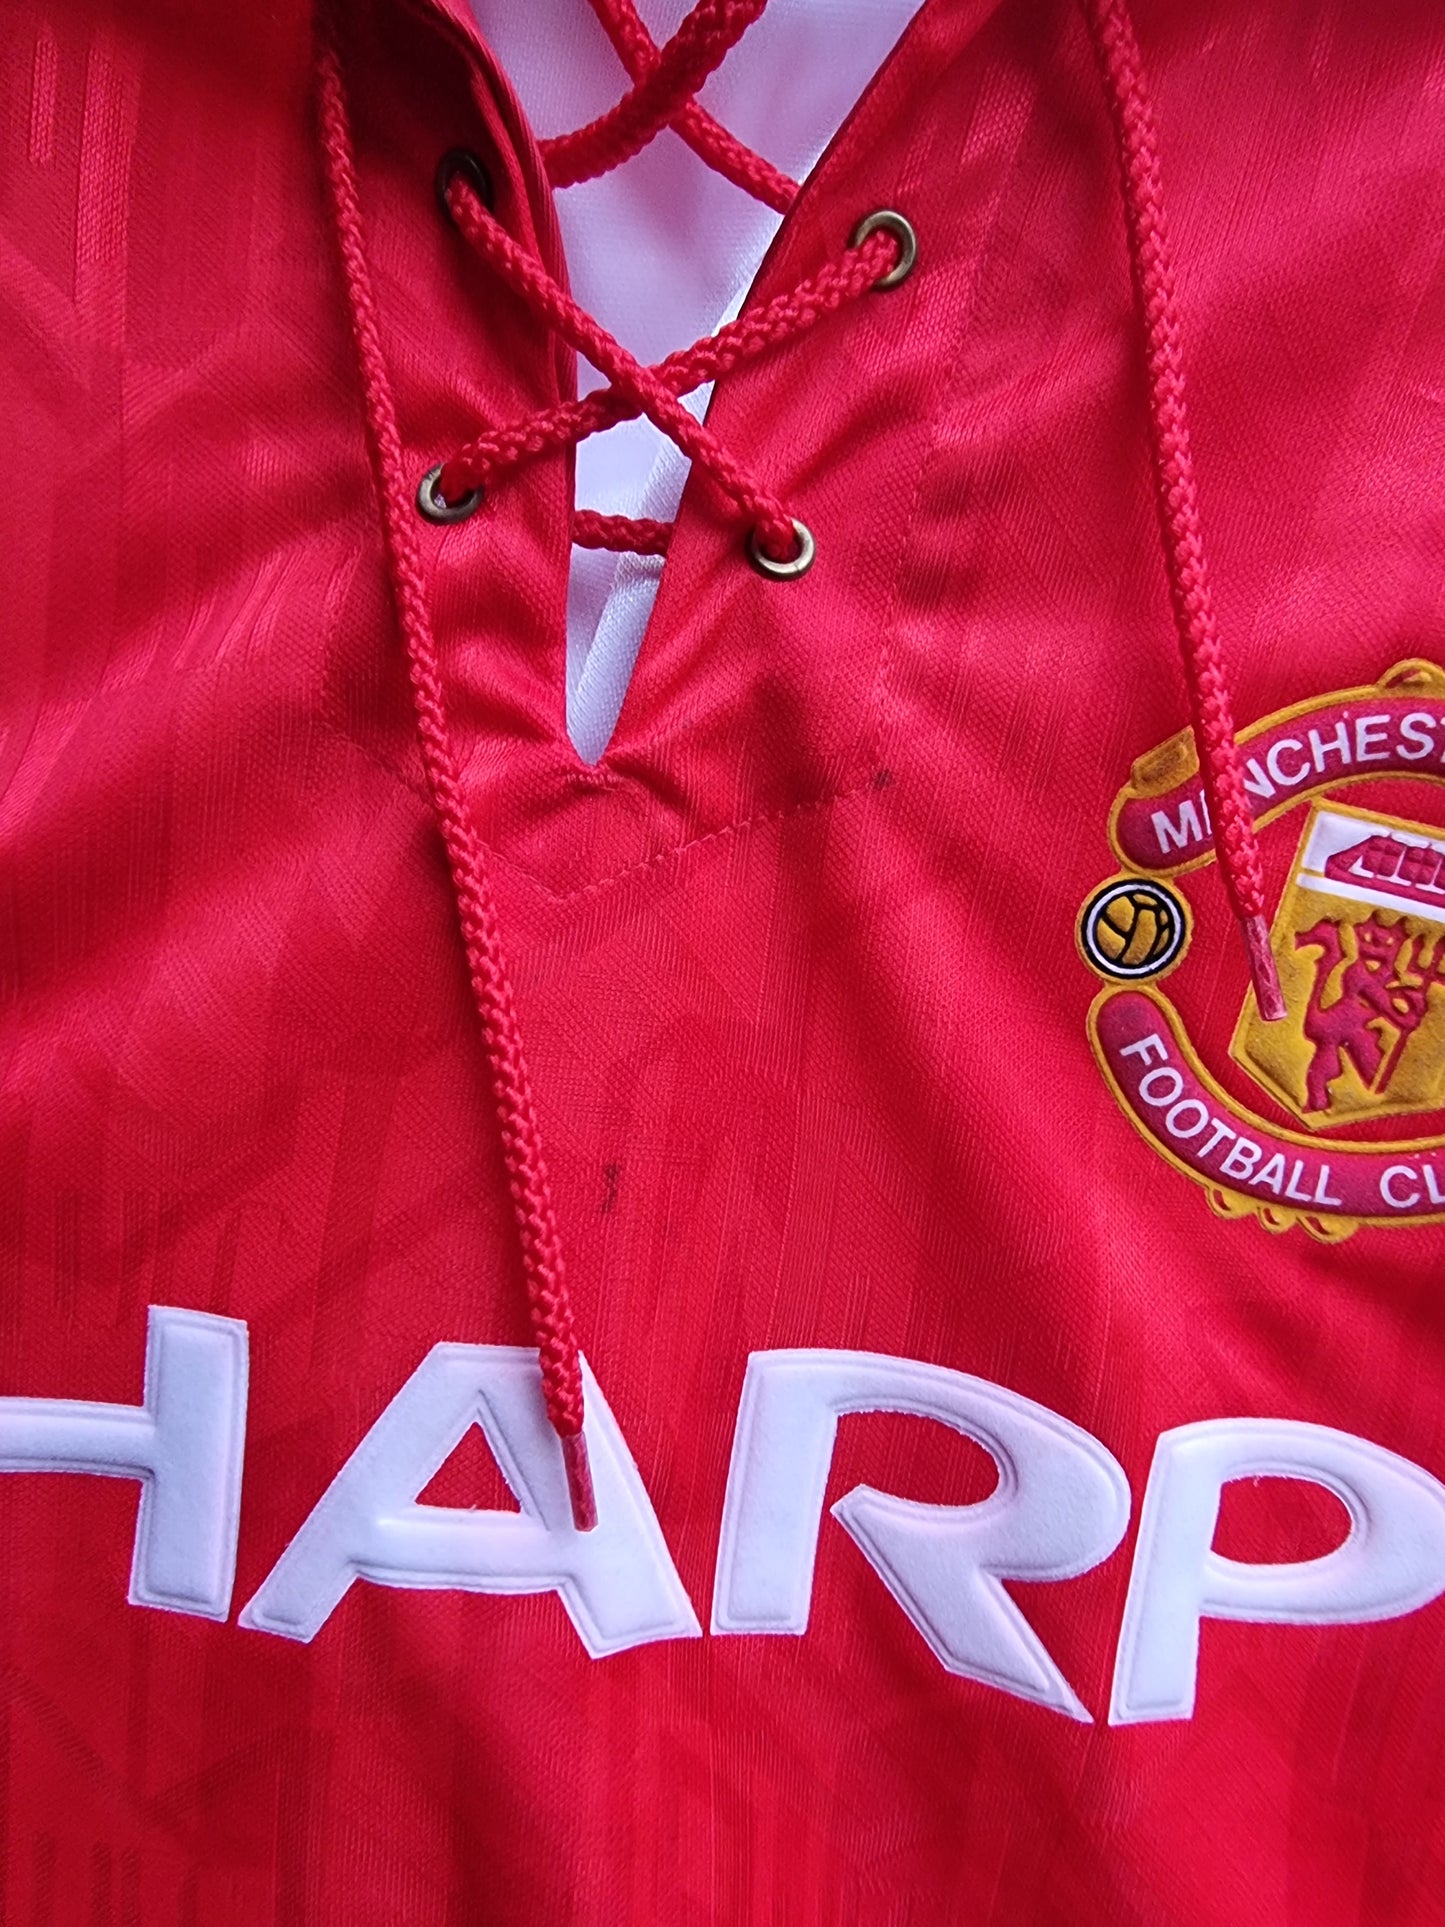 Umbro Manchester United 92/94 'Sharpe 5' Signed Home Shirt Medium